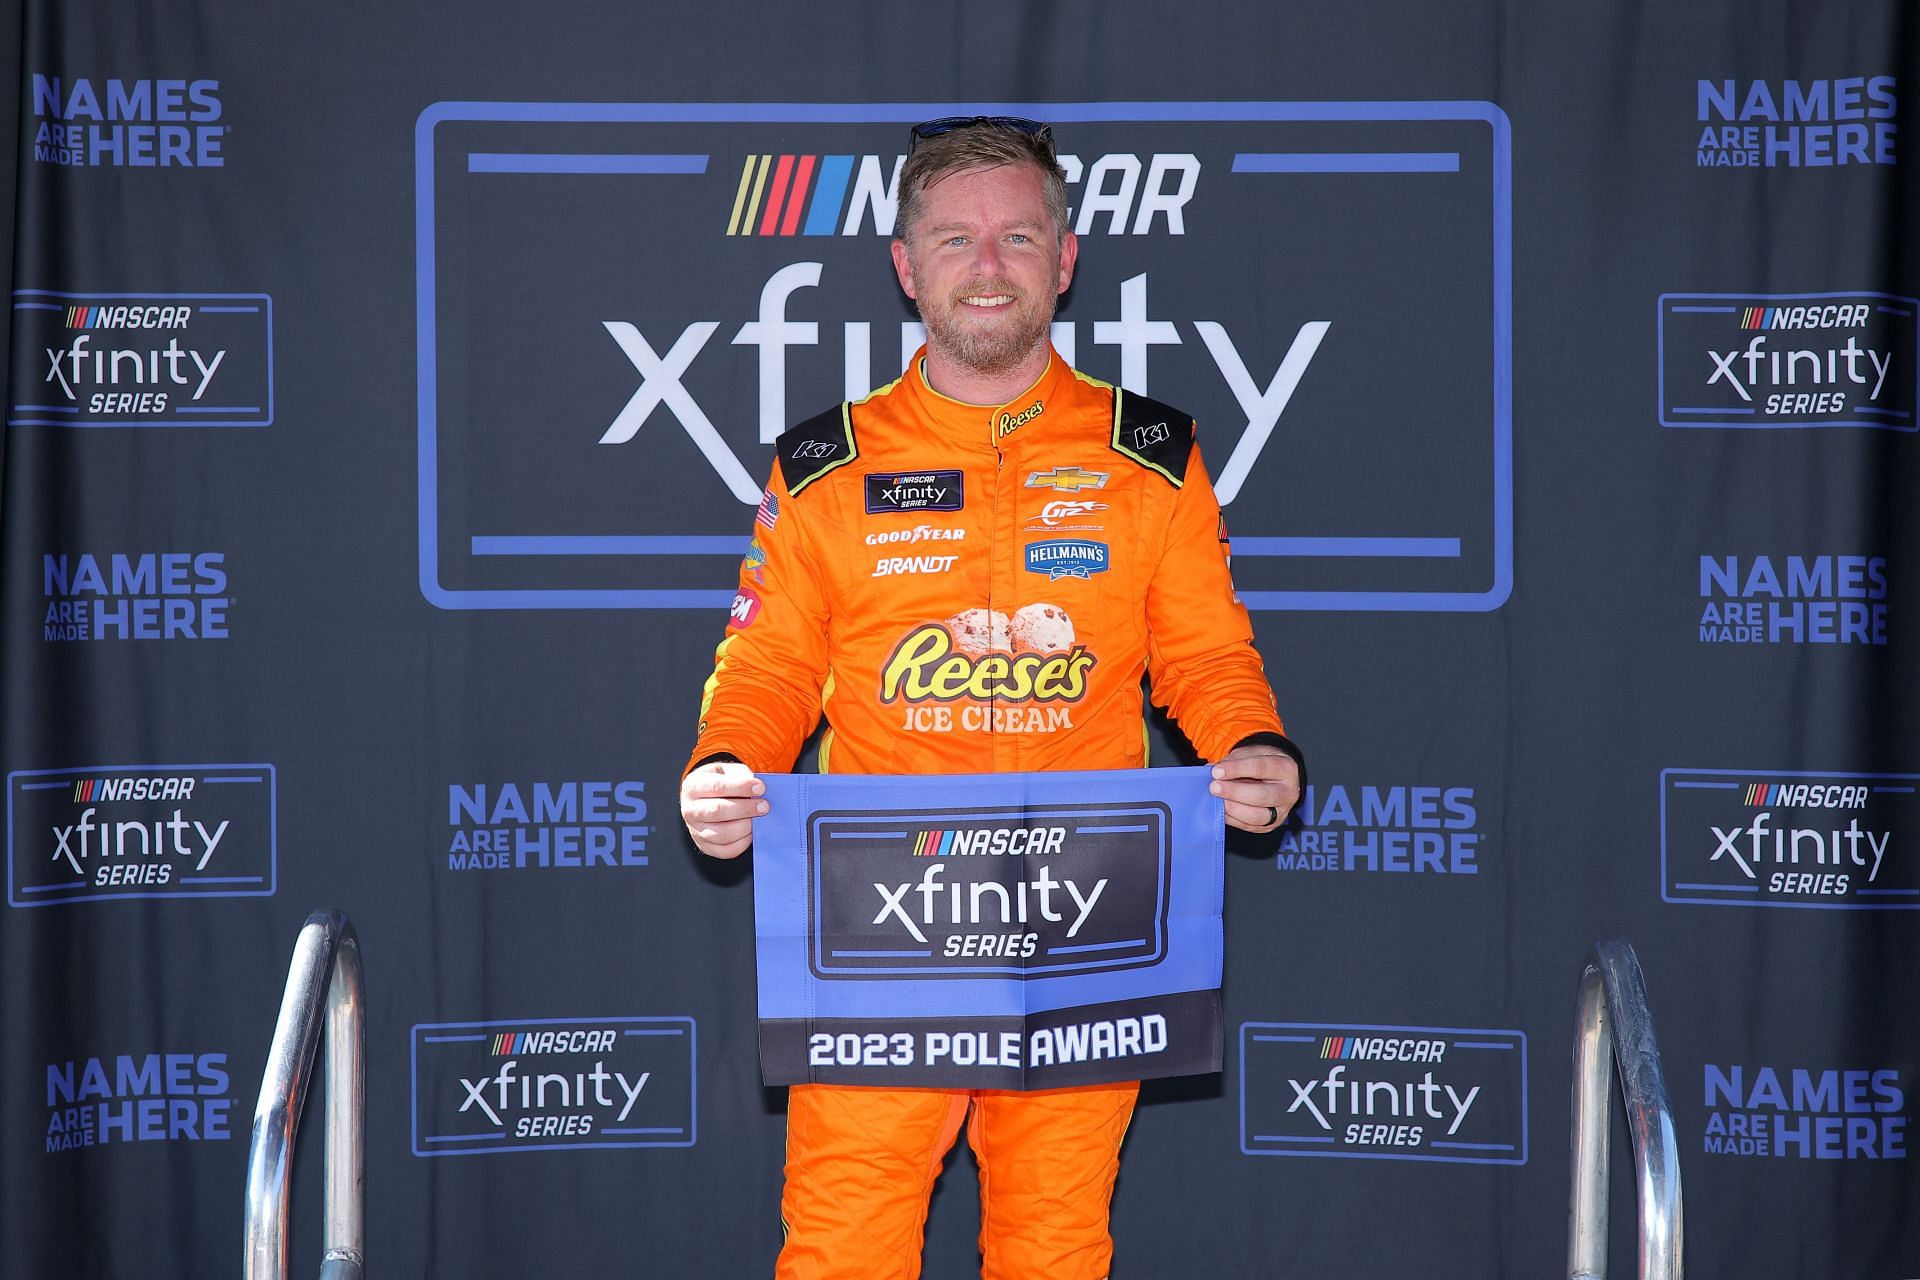 NASCAR Xfinity Series Andy